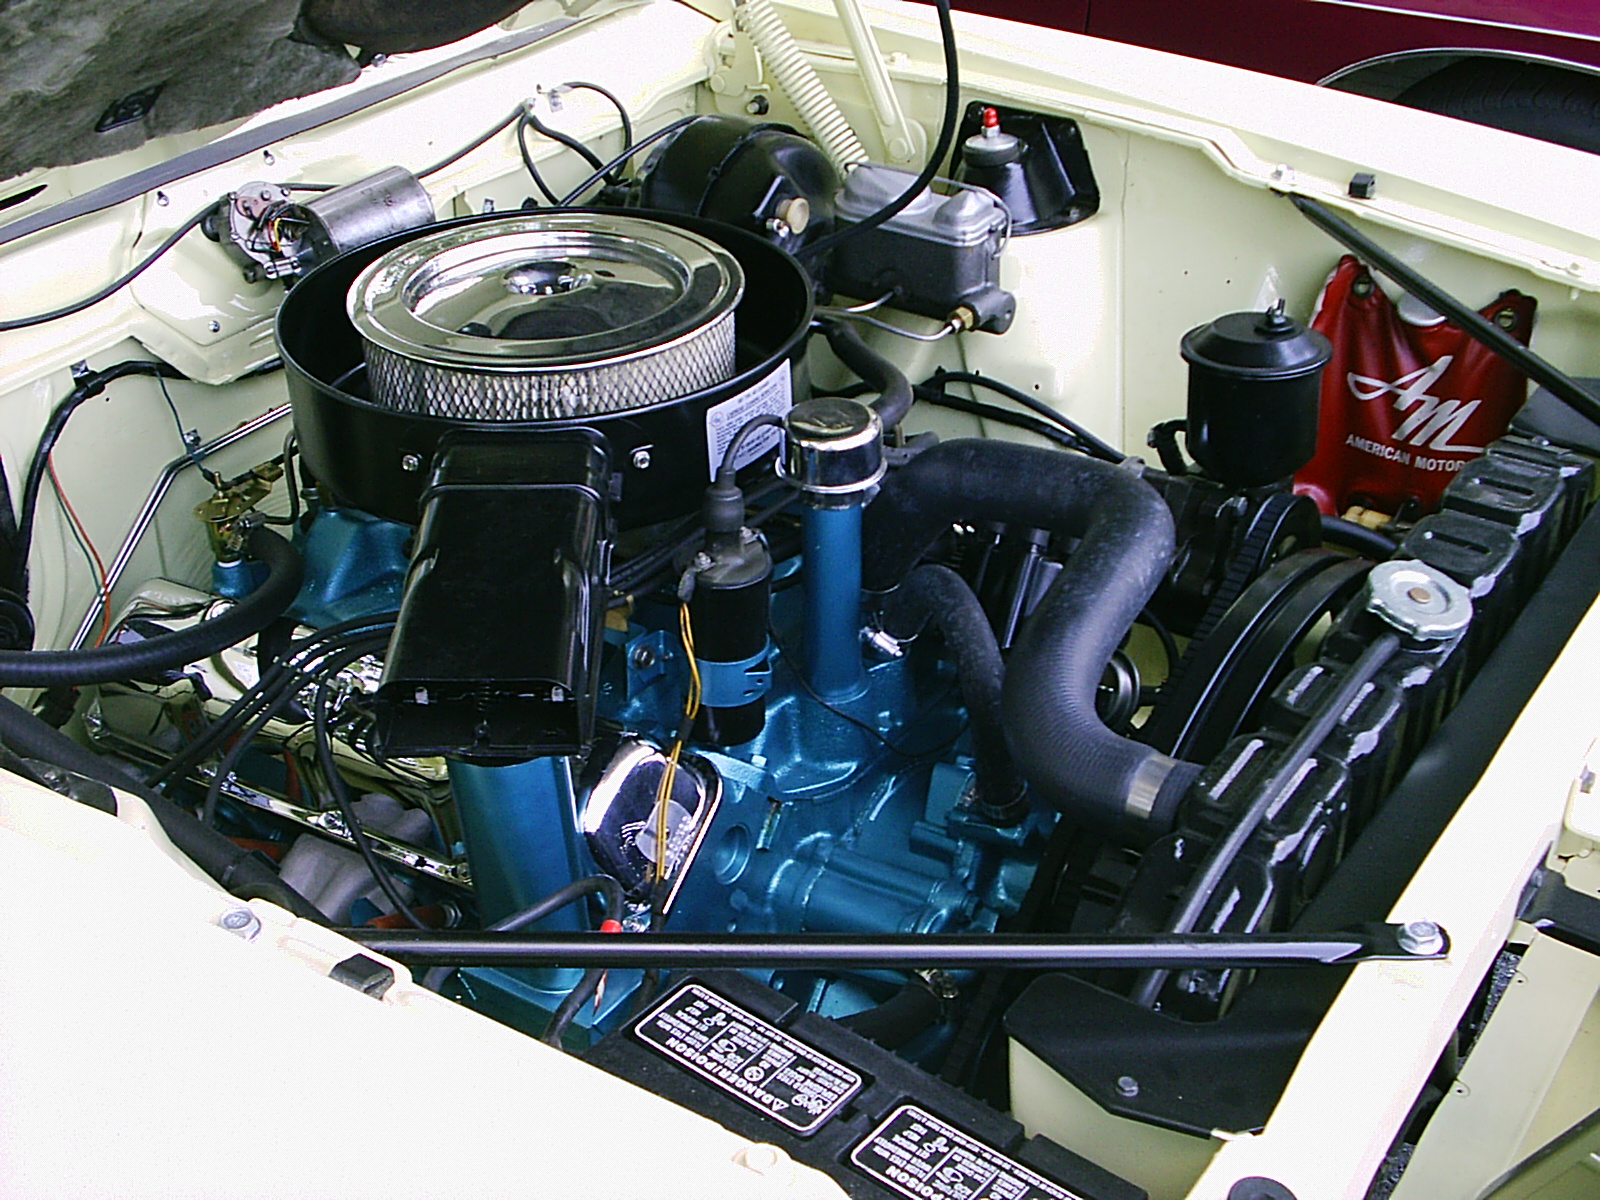 Chrysler 360 crate engine